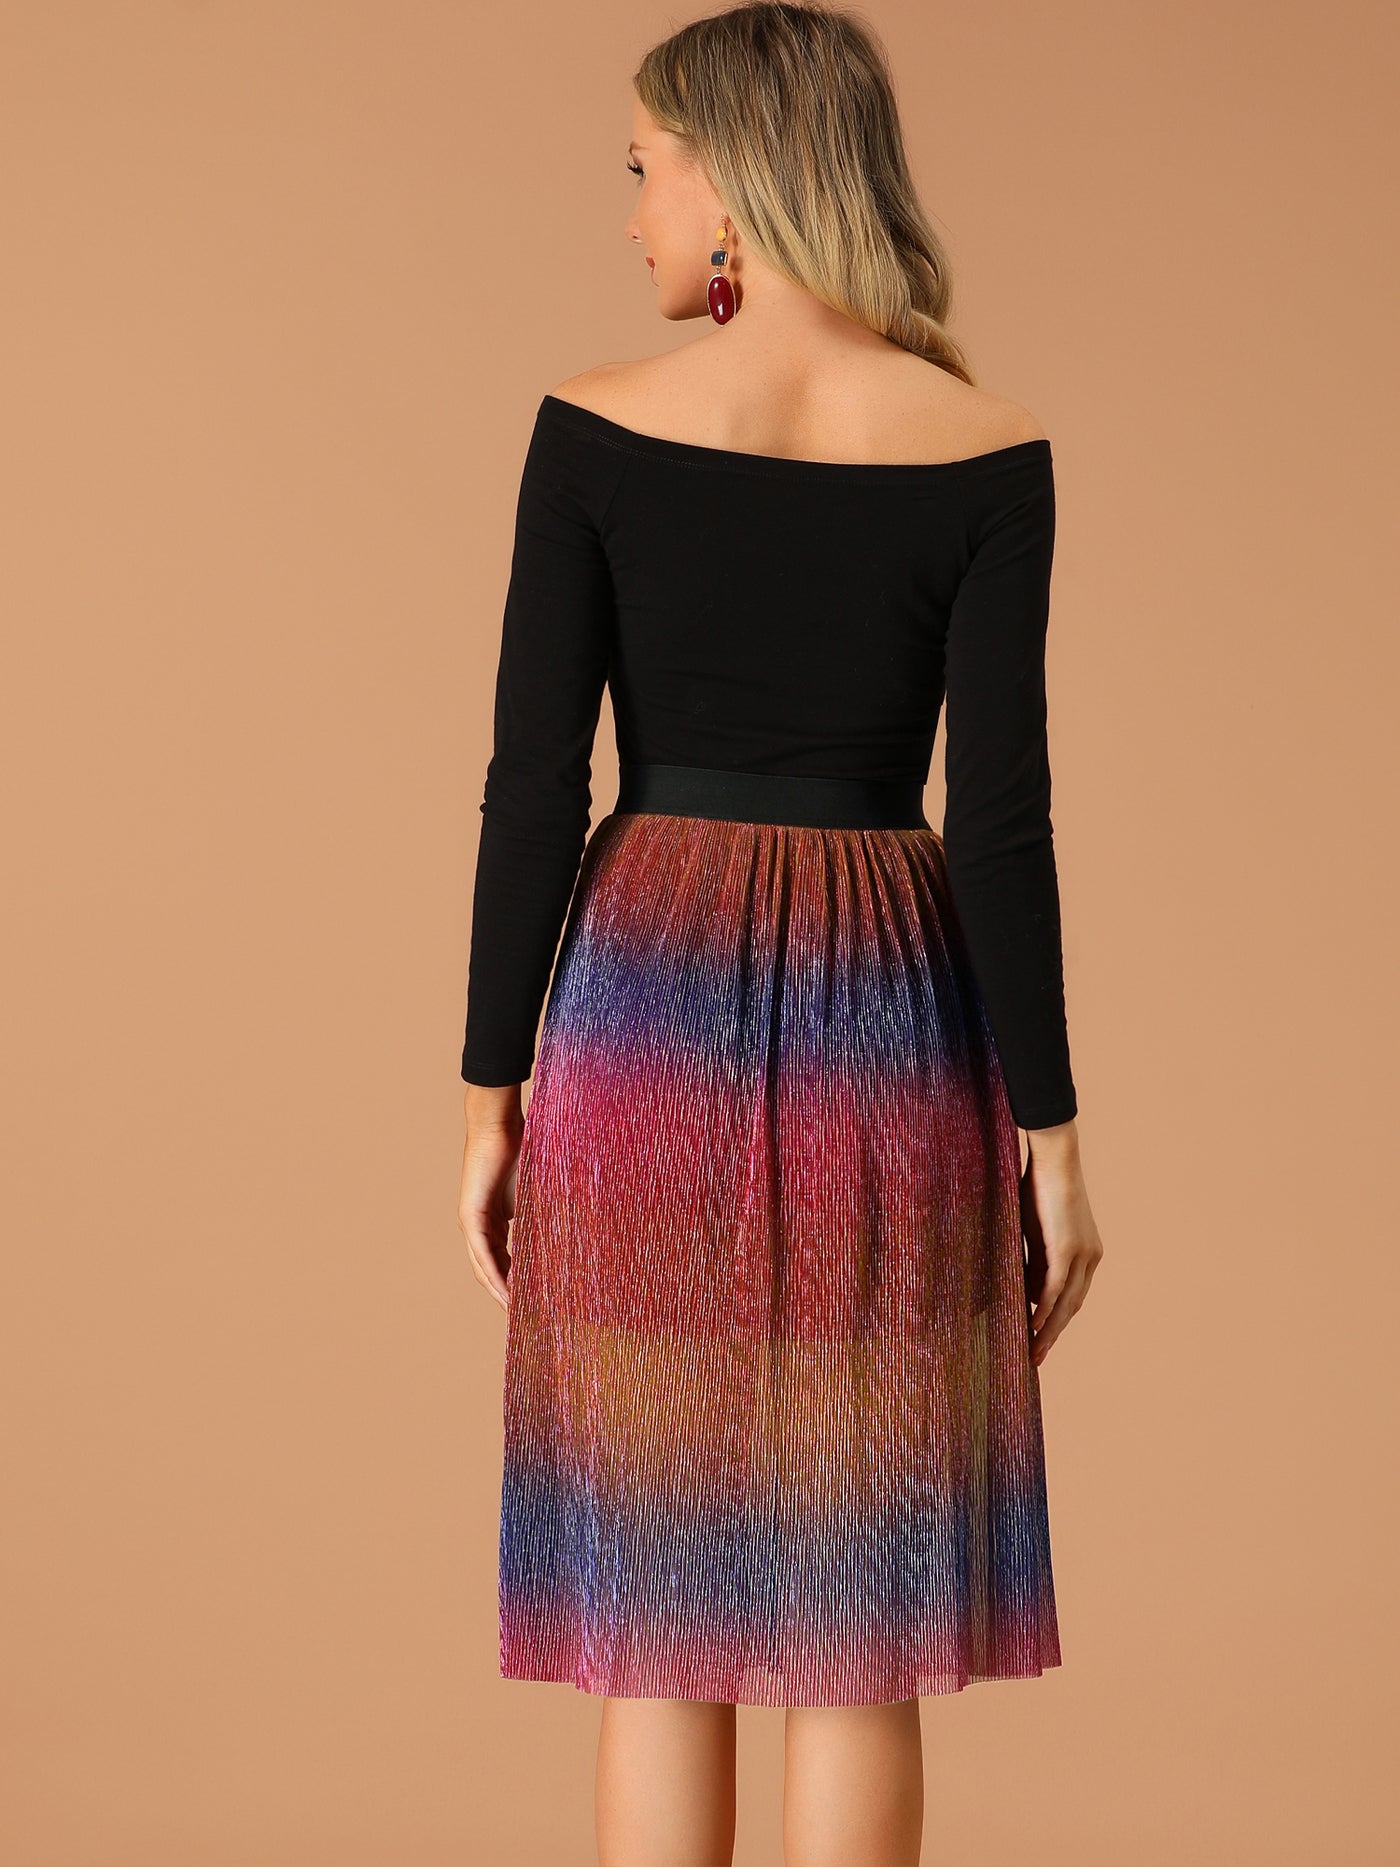 Allegra K Rainbow Elastic Waist Metallic Shiny Swing Party Skirt